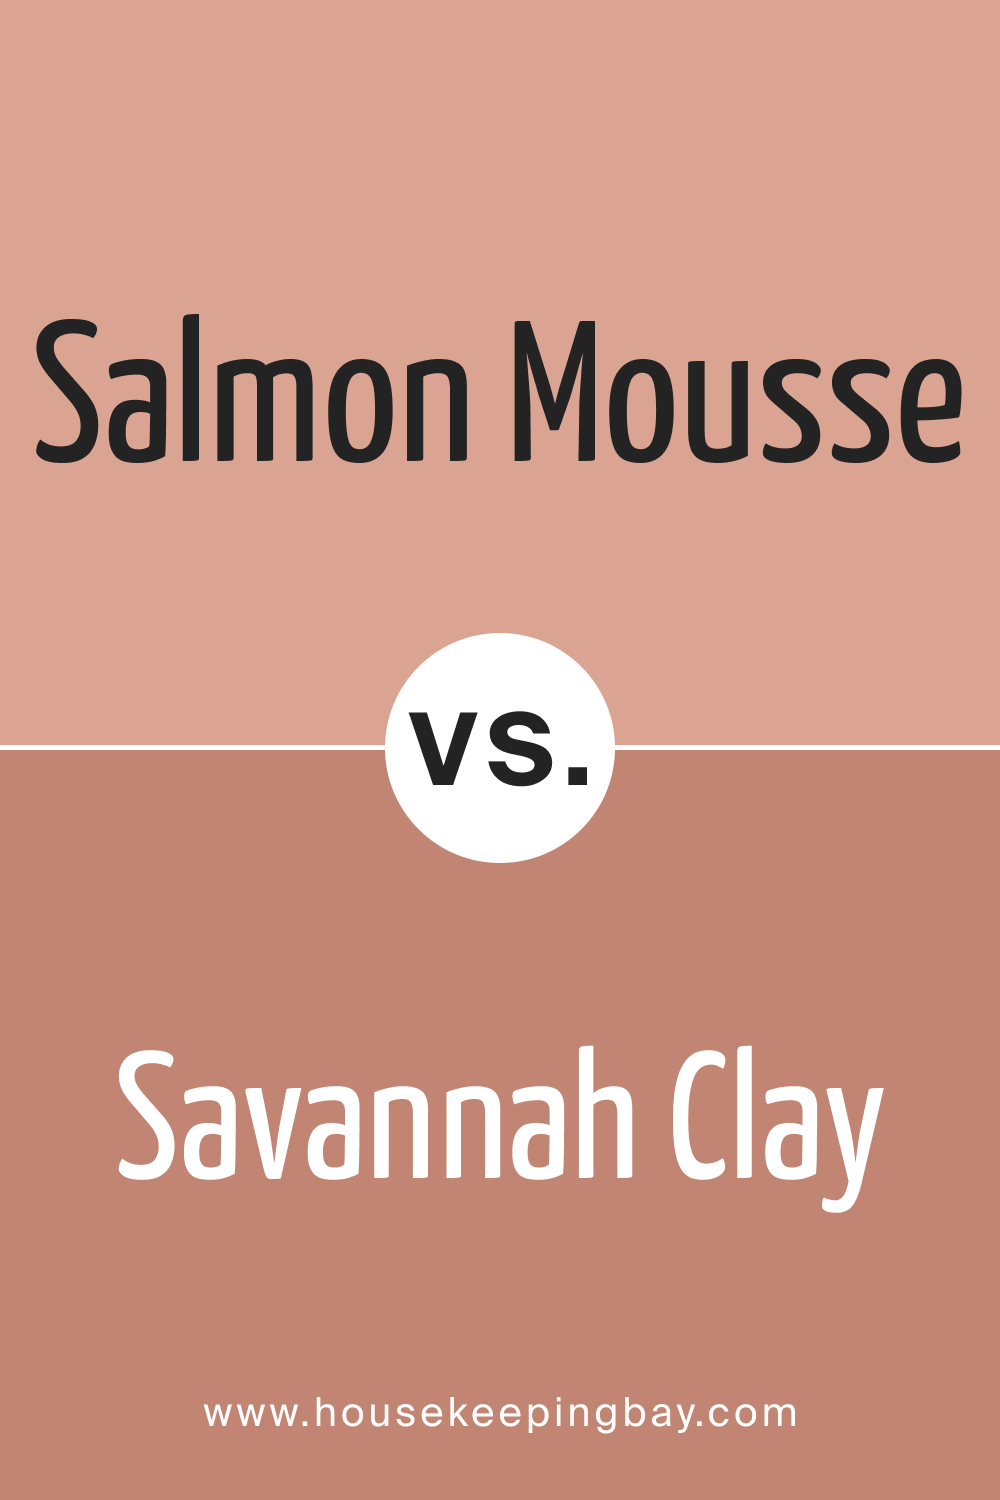 BM Salmon Mousse 046 vs. BM 047 Savannah Clay